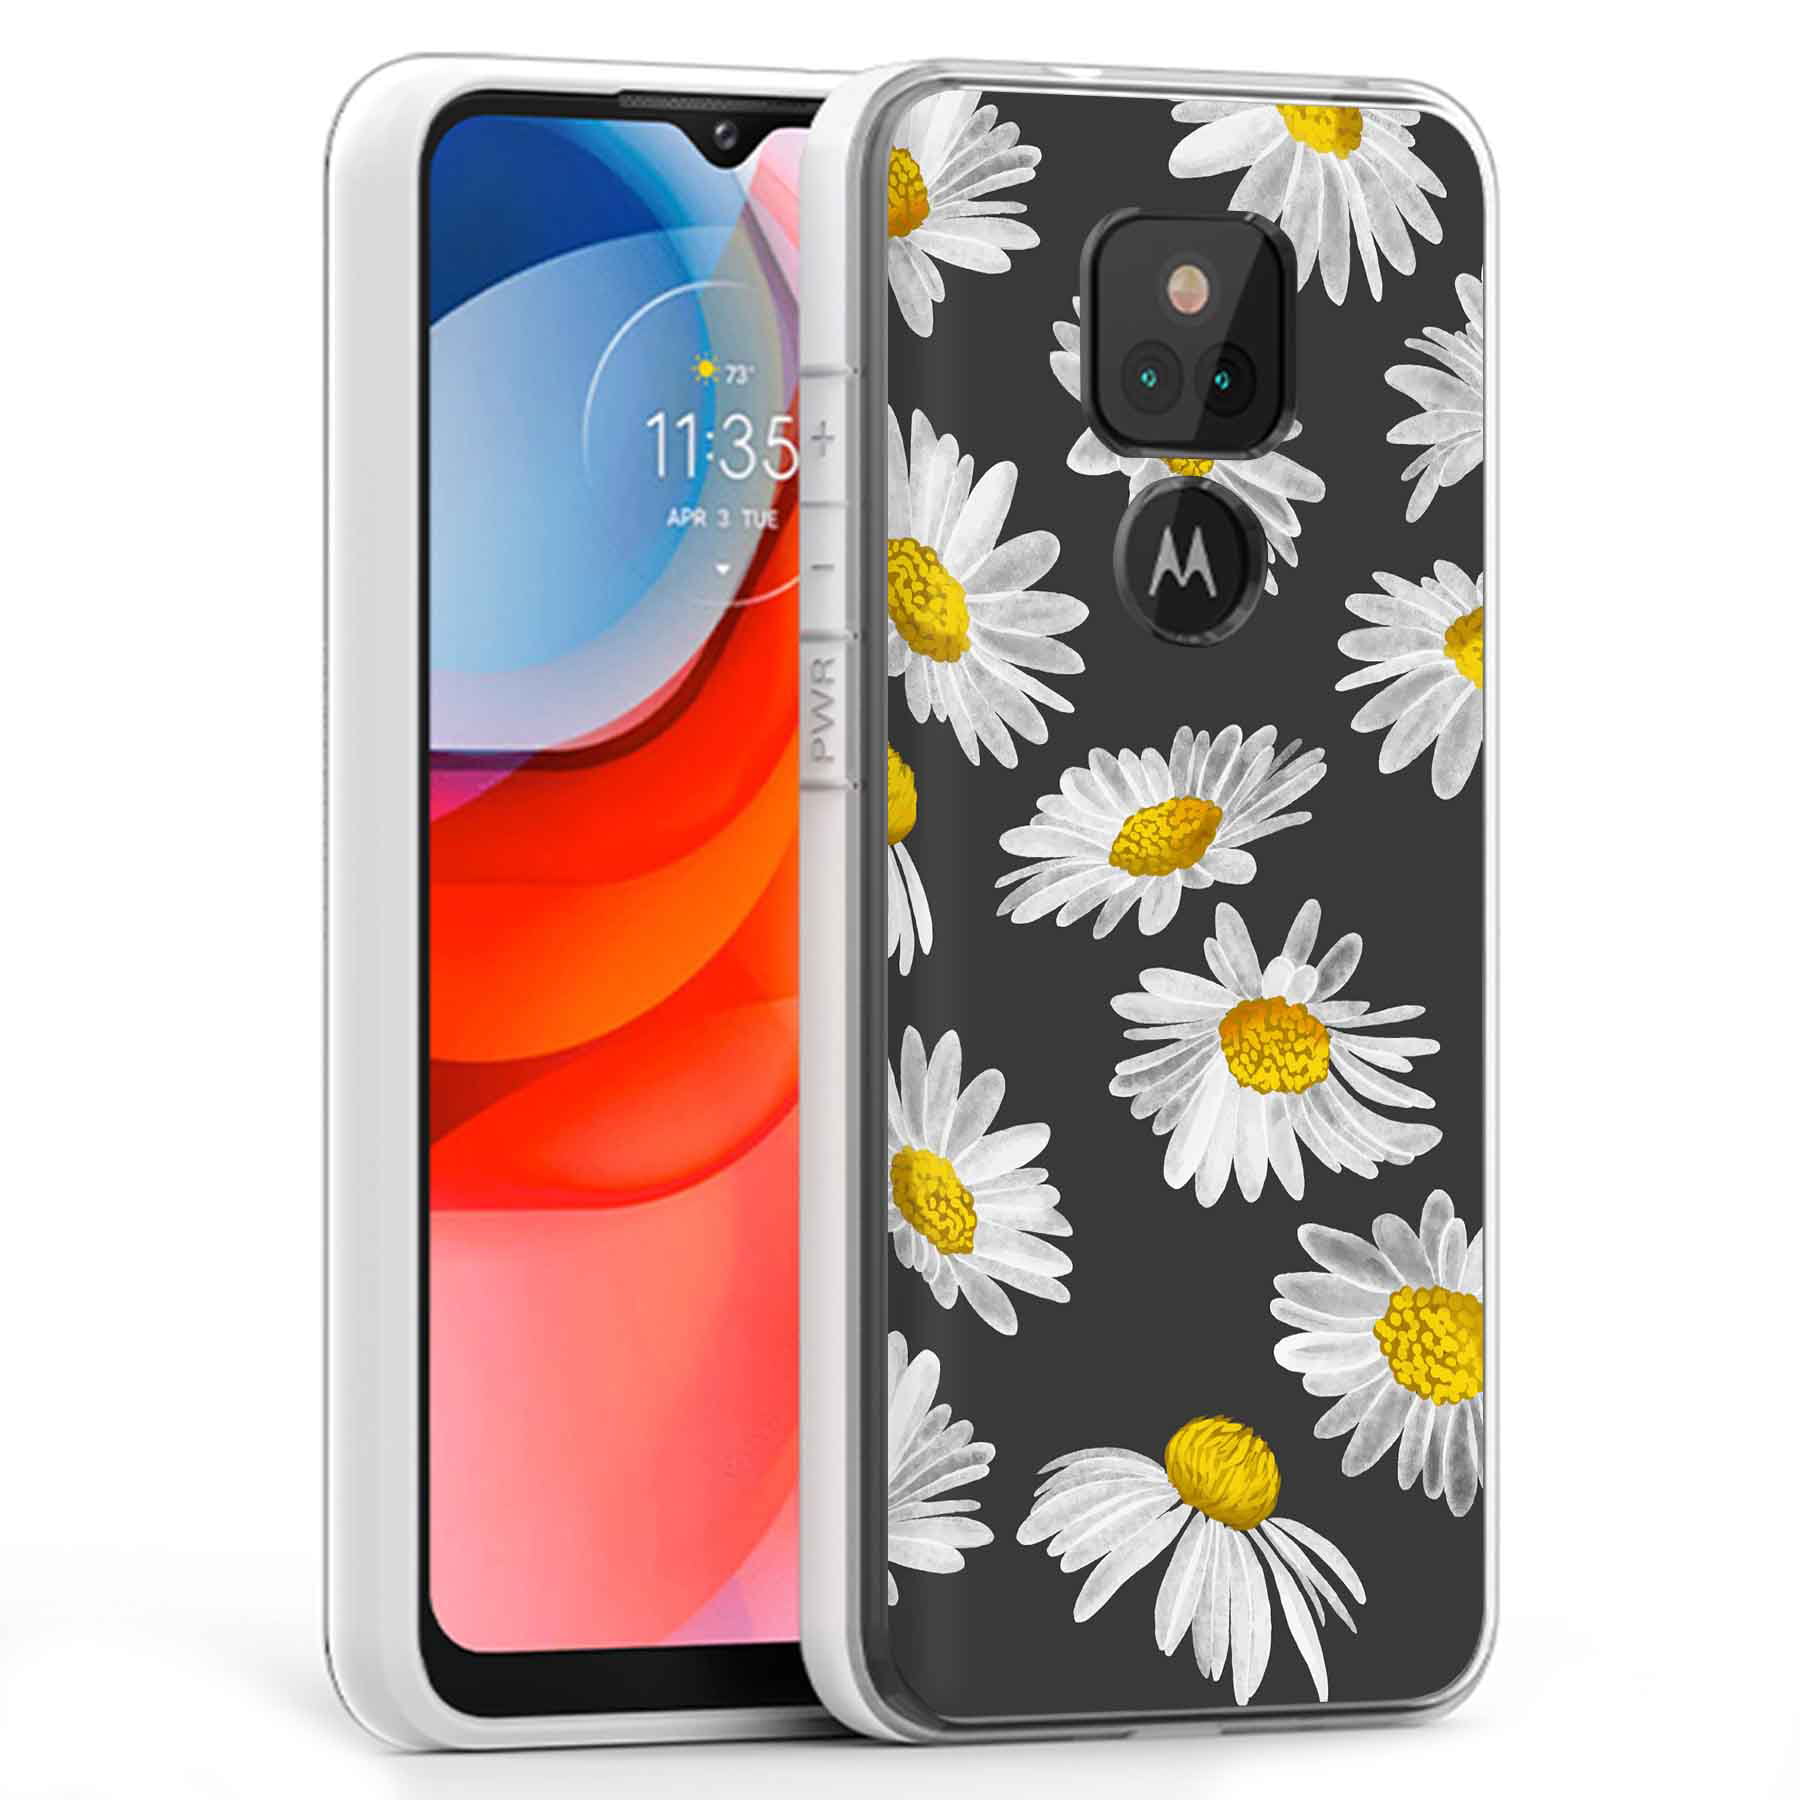 Clear Phone Case Cover Motorola Moto G Play 2021,Moto G Play,Watercolor Design Print,Light,Flexible,ProtectUSA